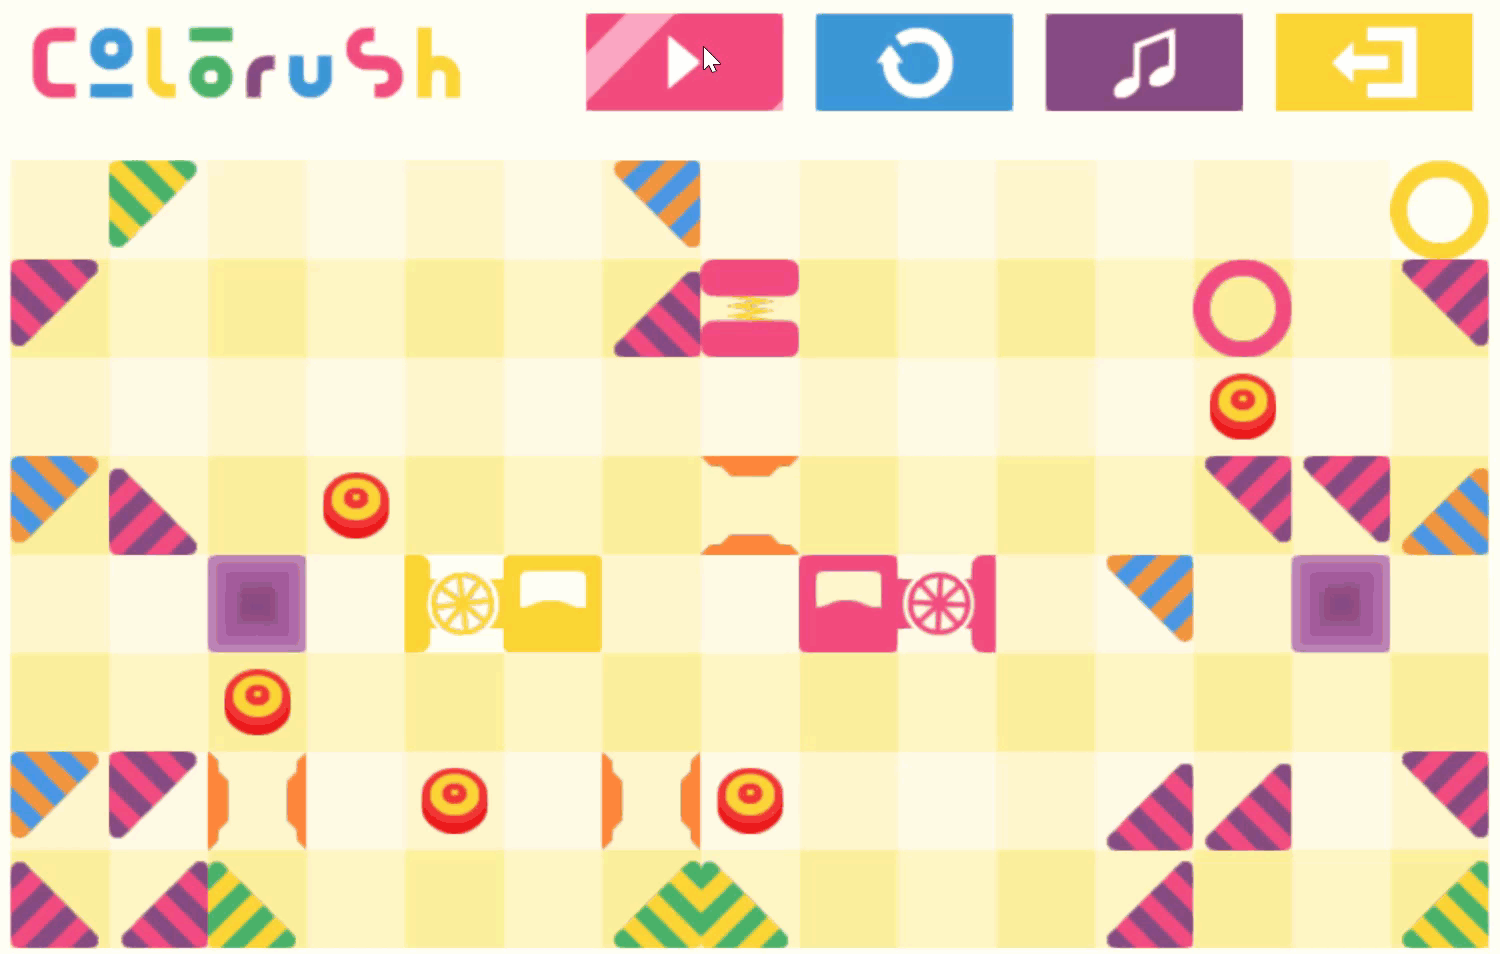 Colorush Game Level 29 Screenshot.